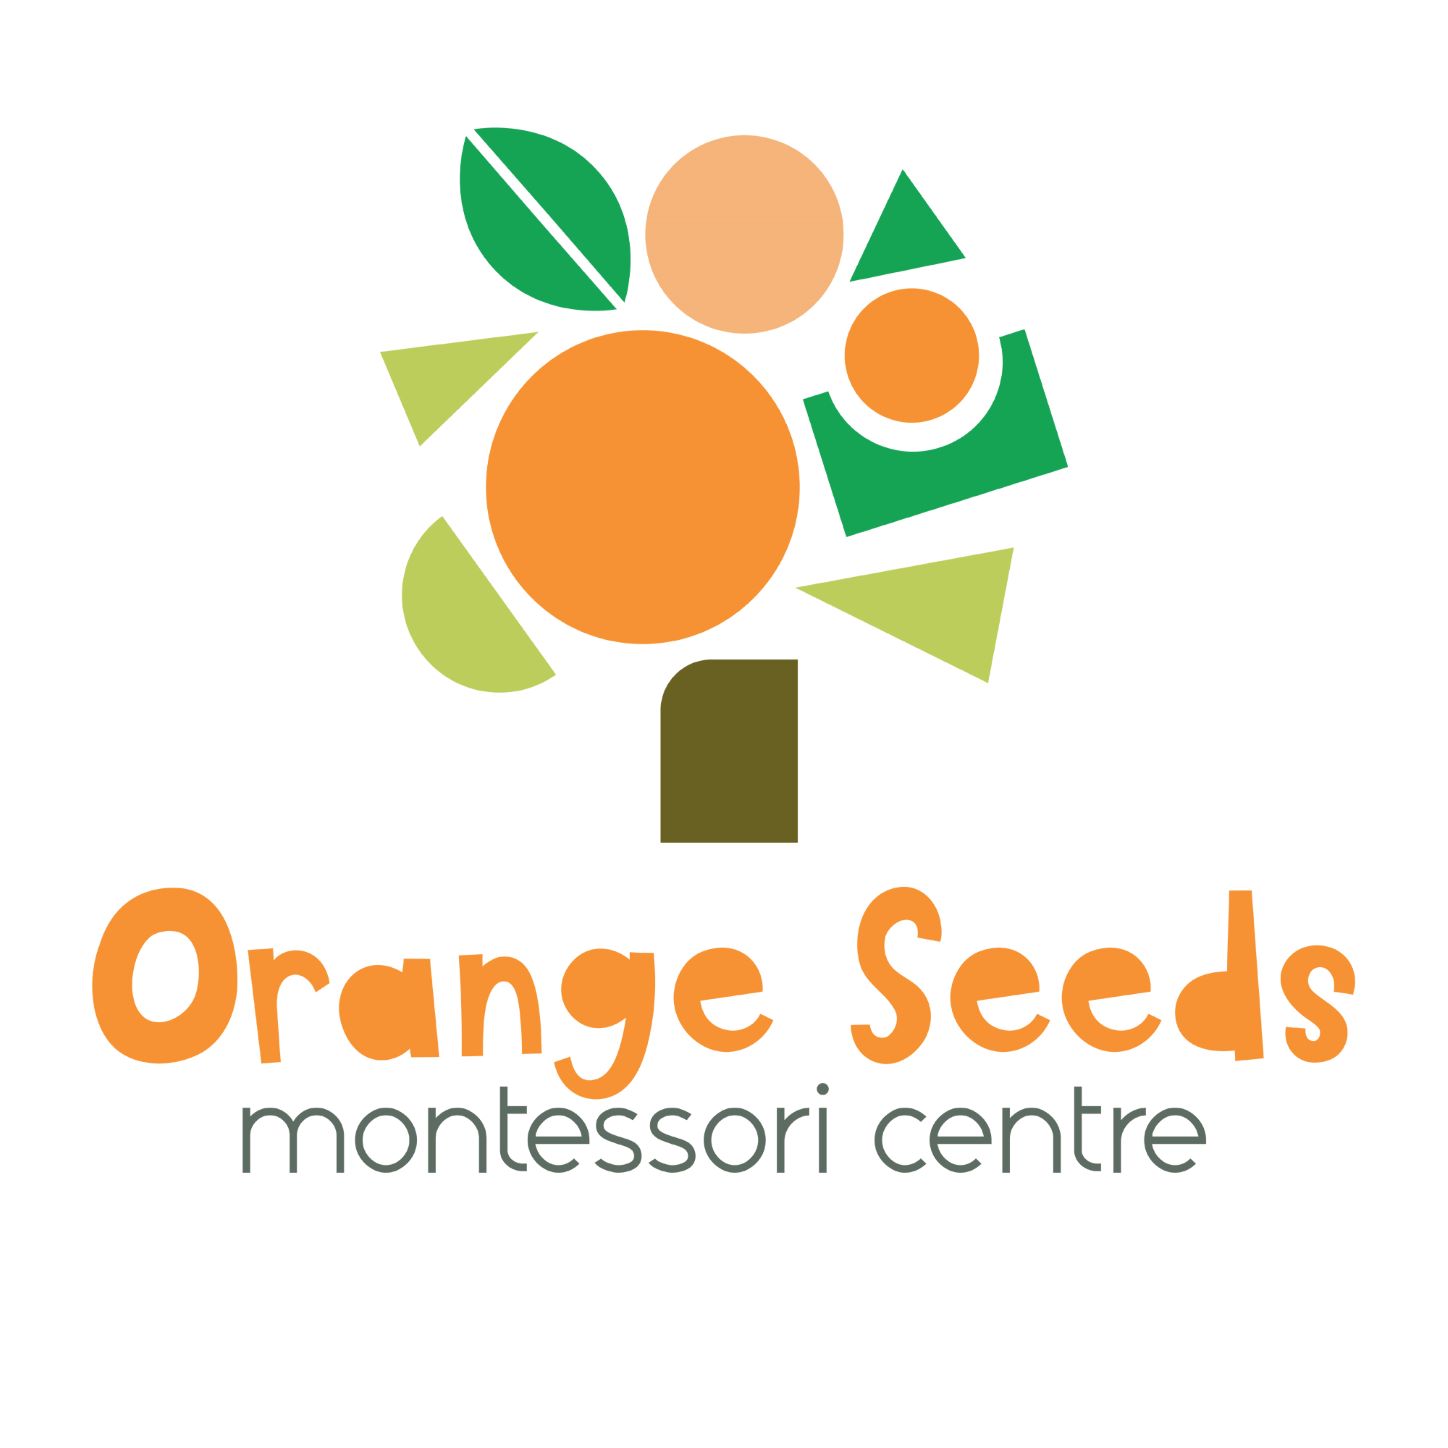 Orange-Seeds-Montessori-Centre-Logo.jpg